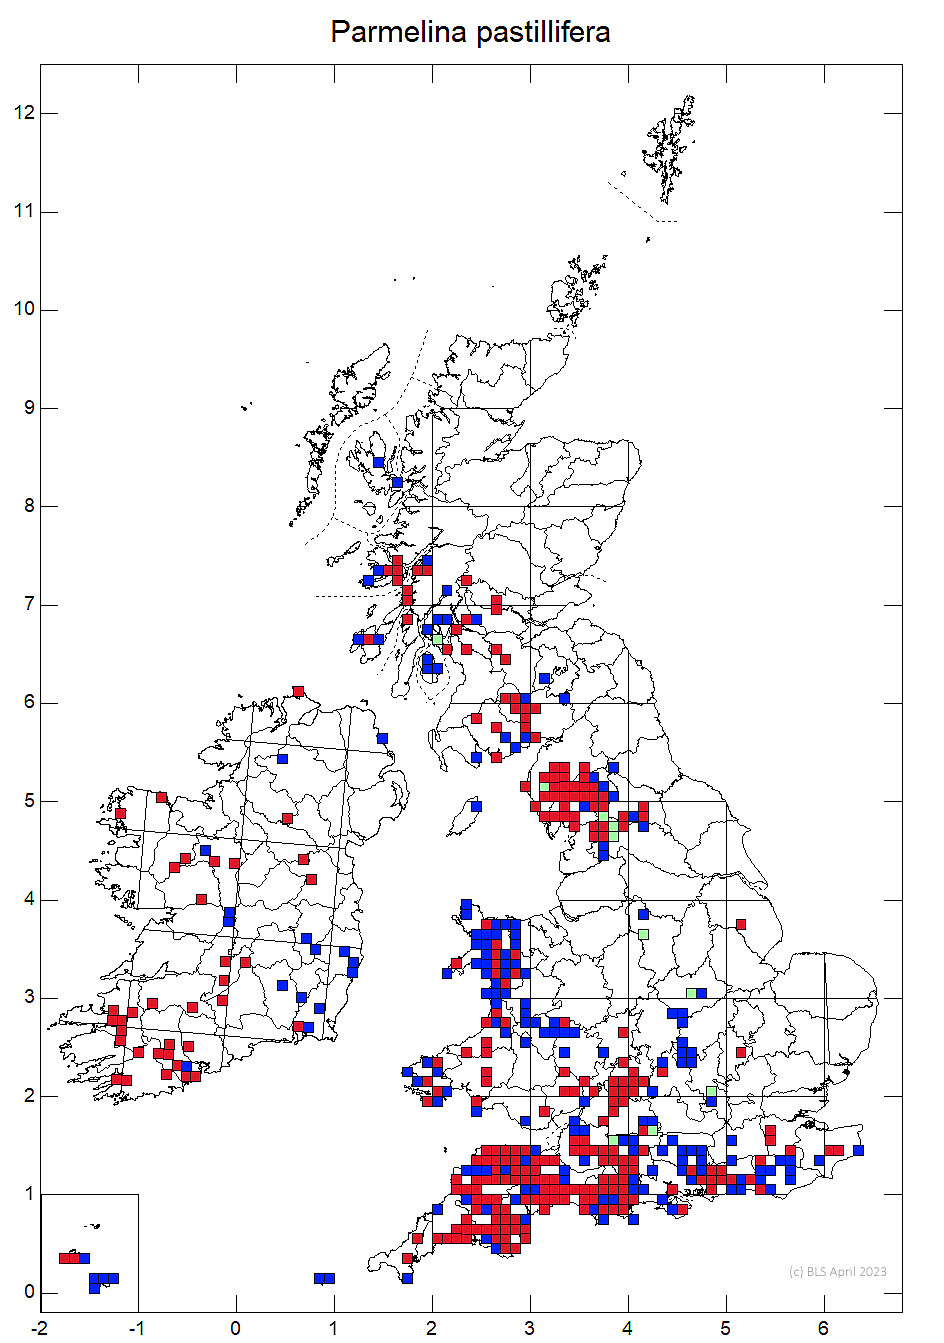 Parmelina pastillifera 10km sq distribution map